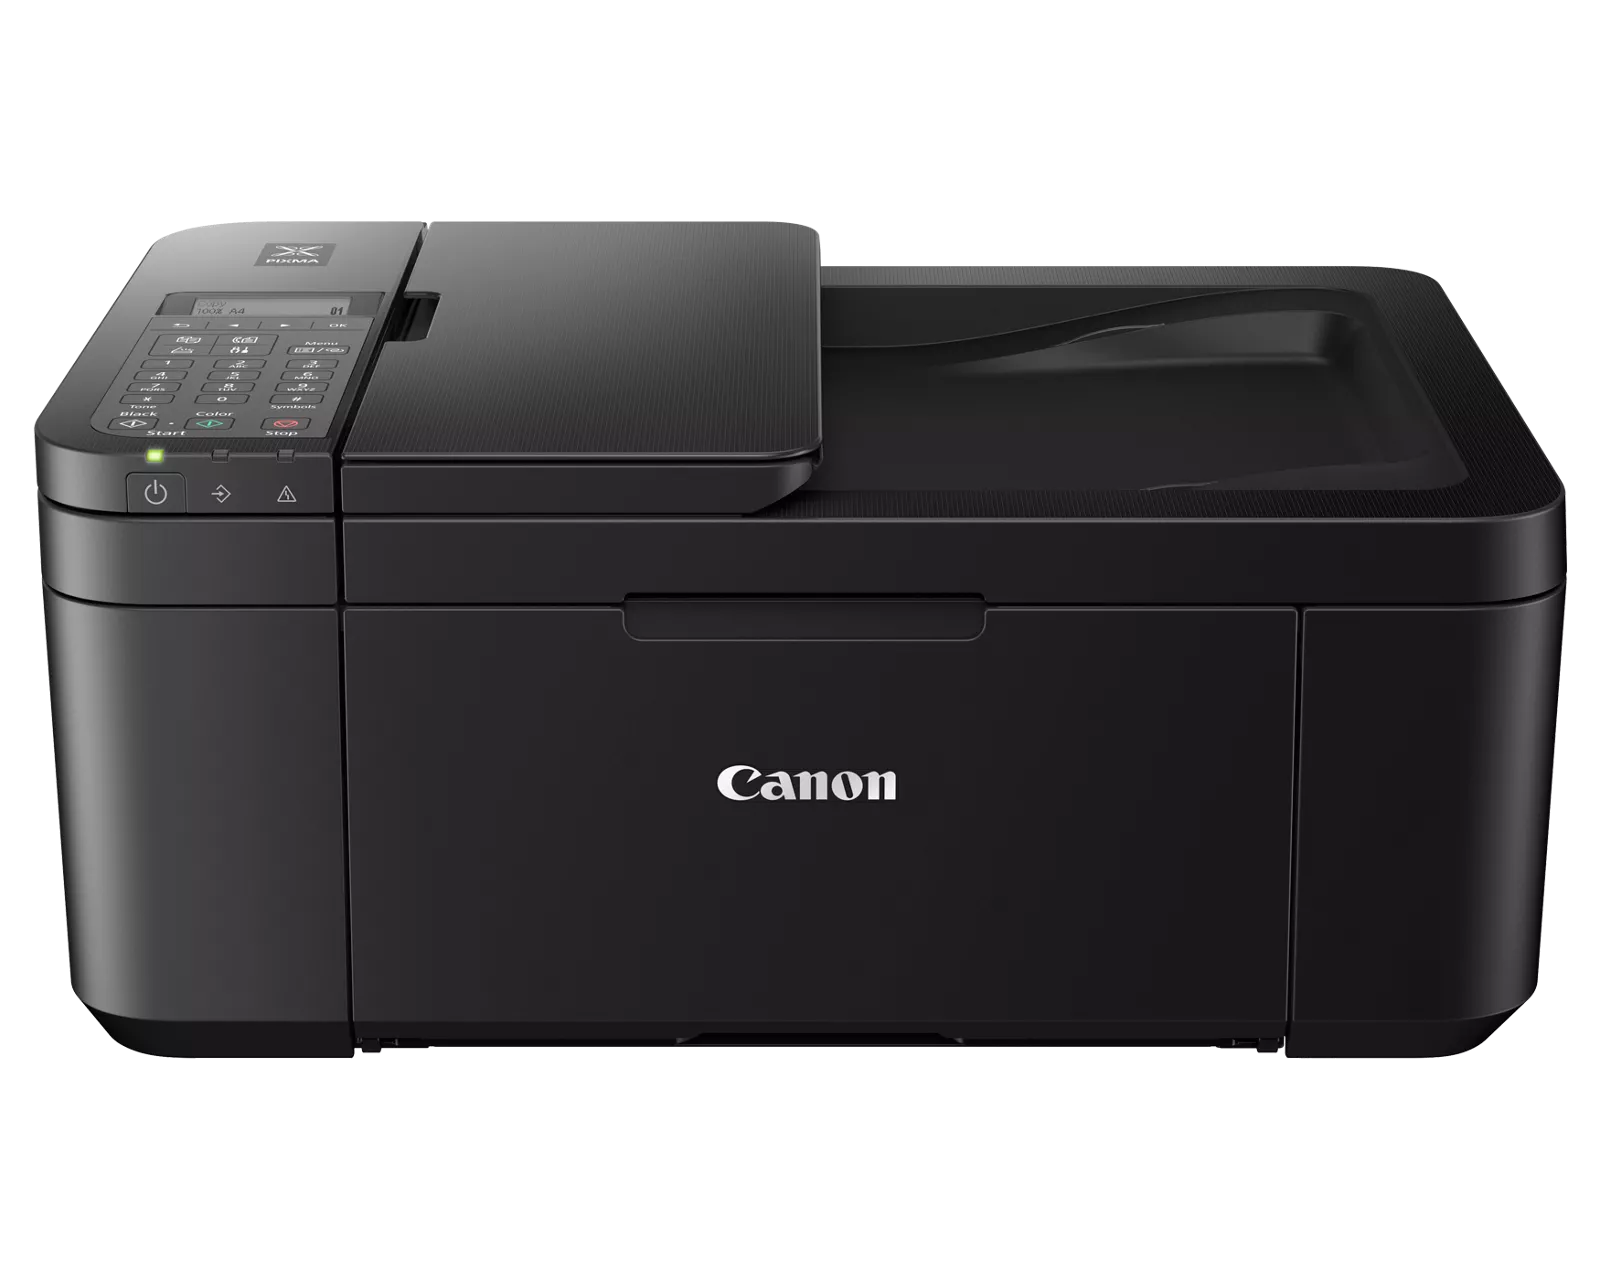 Недорогие принтеры для печати. Canon PIXMA tr4540. Принтер Canon 4540. МФУ Canon 2984c007. Canon PIXMA tr4540 2984c007.